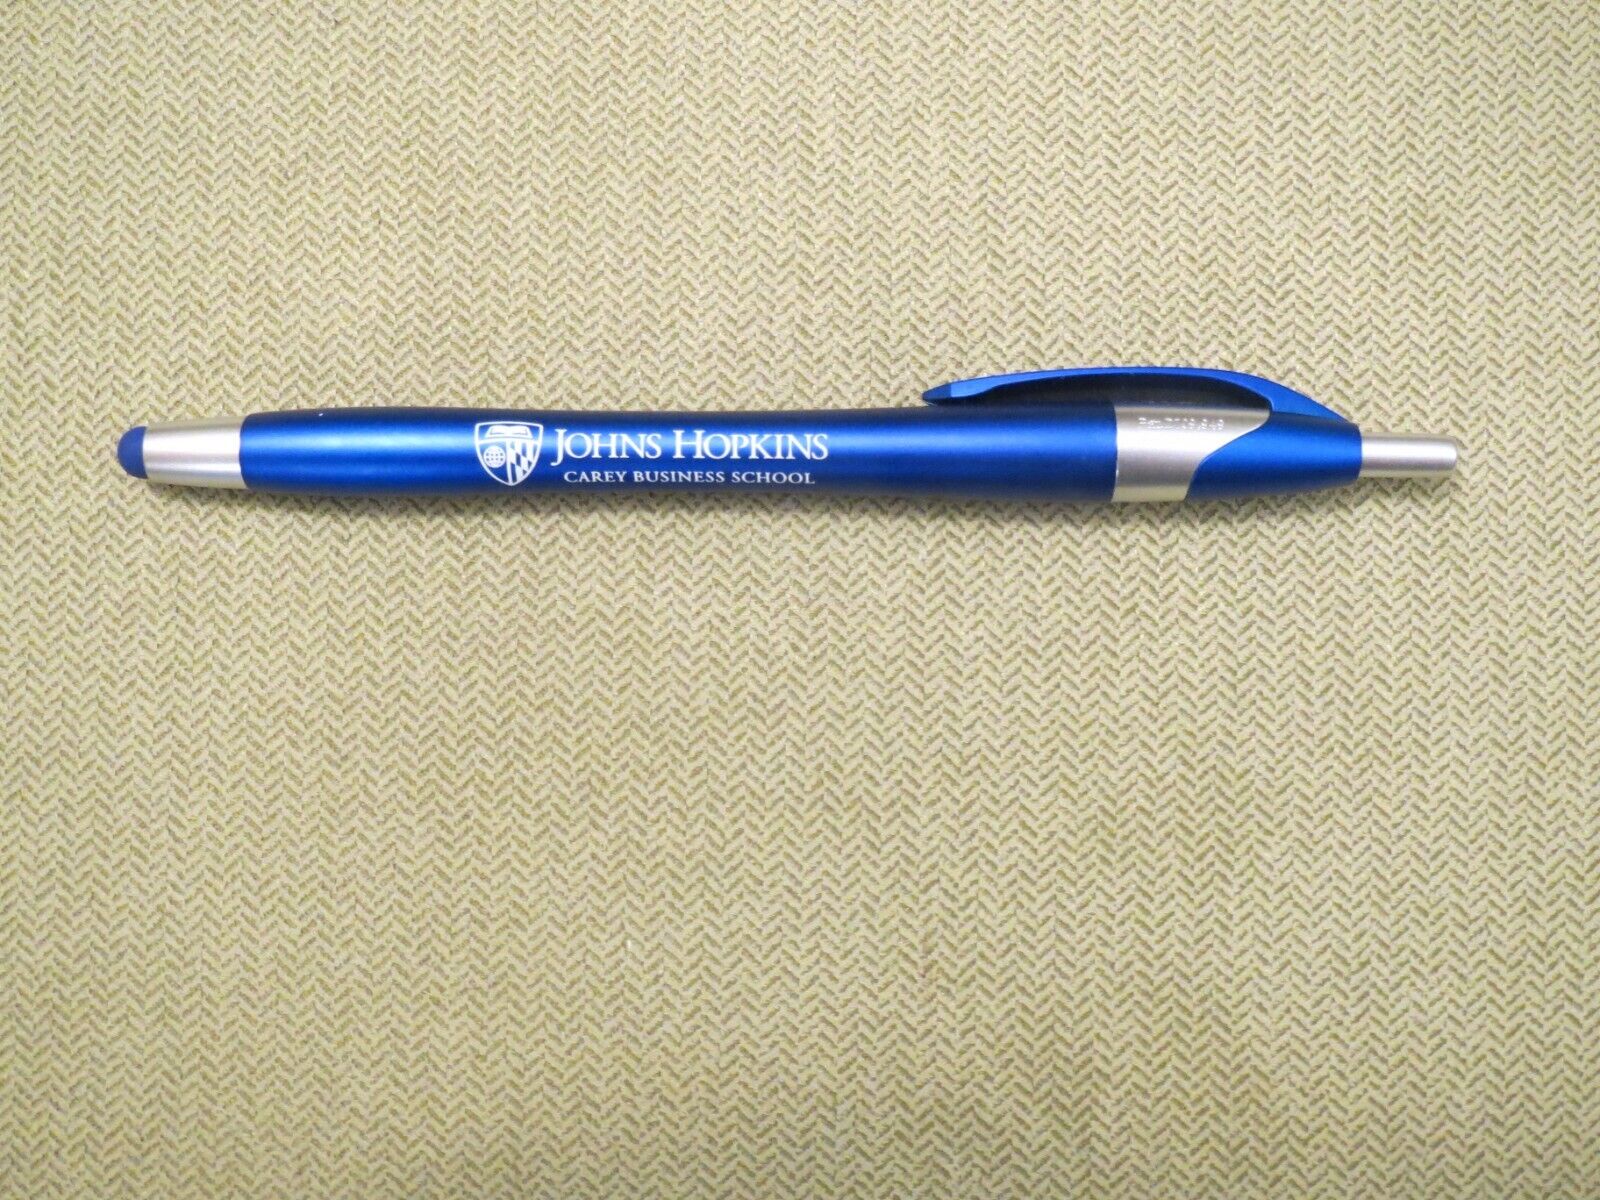 Johns Hopkins University JHU Carey Business School Pen & Tablet Stylus Black Ink